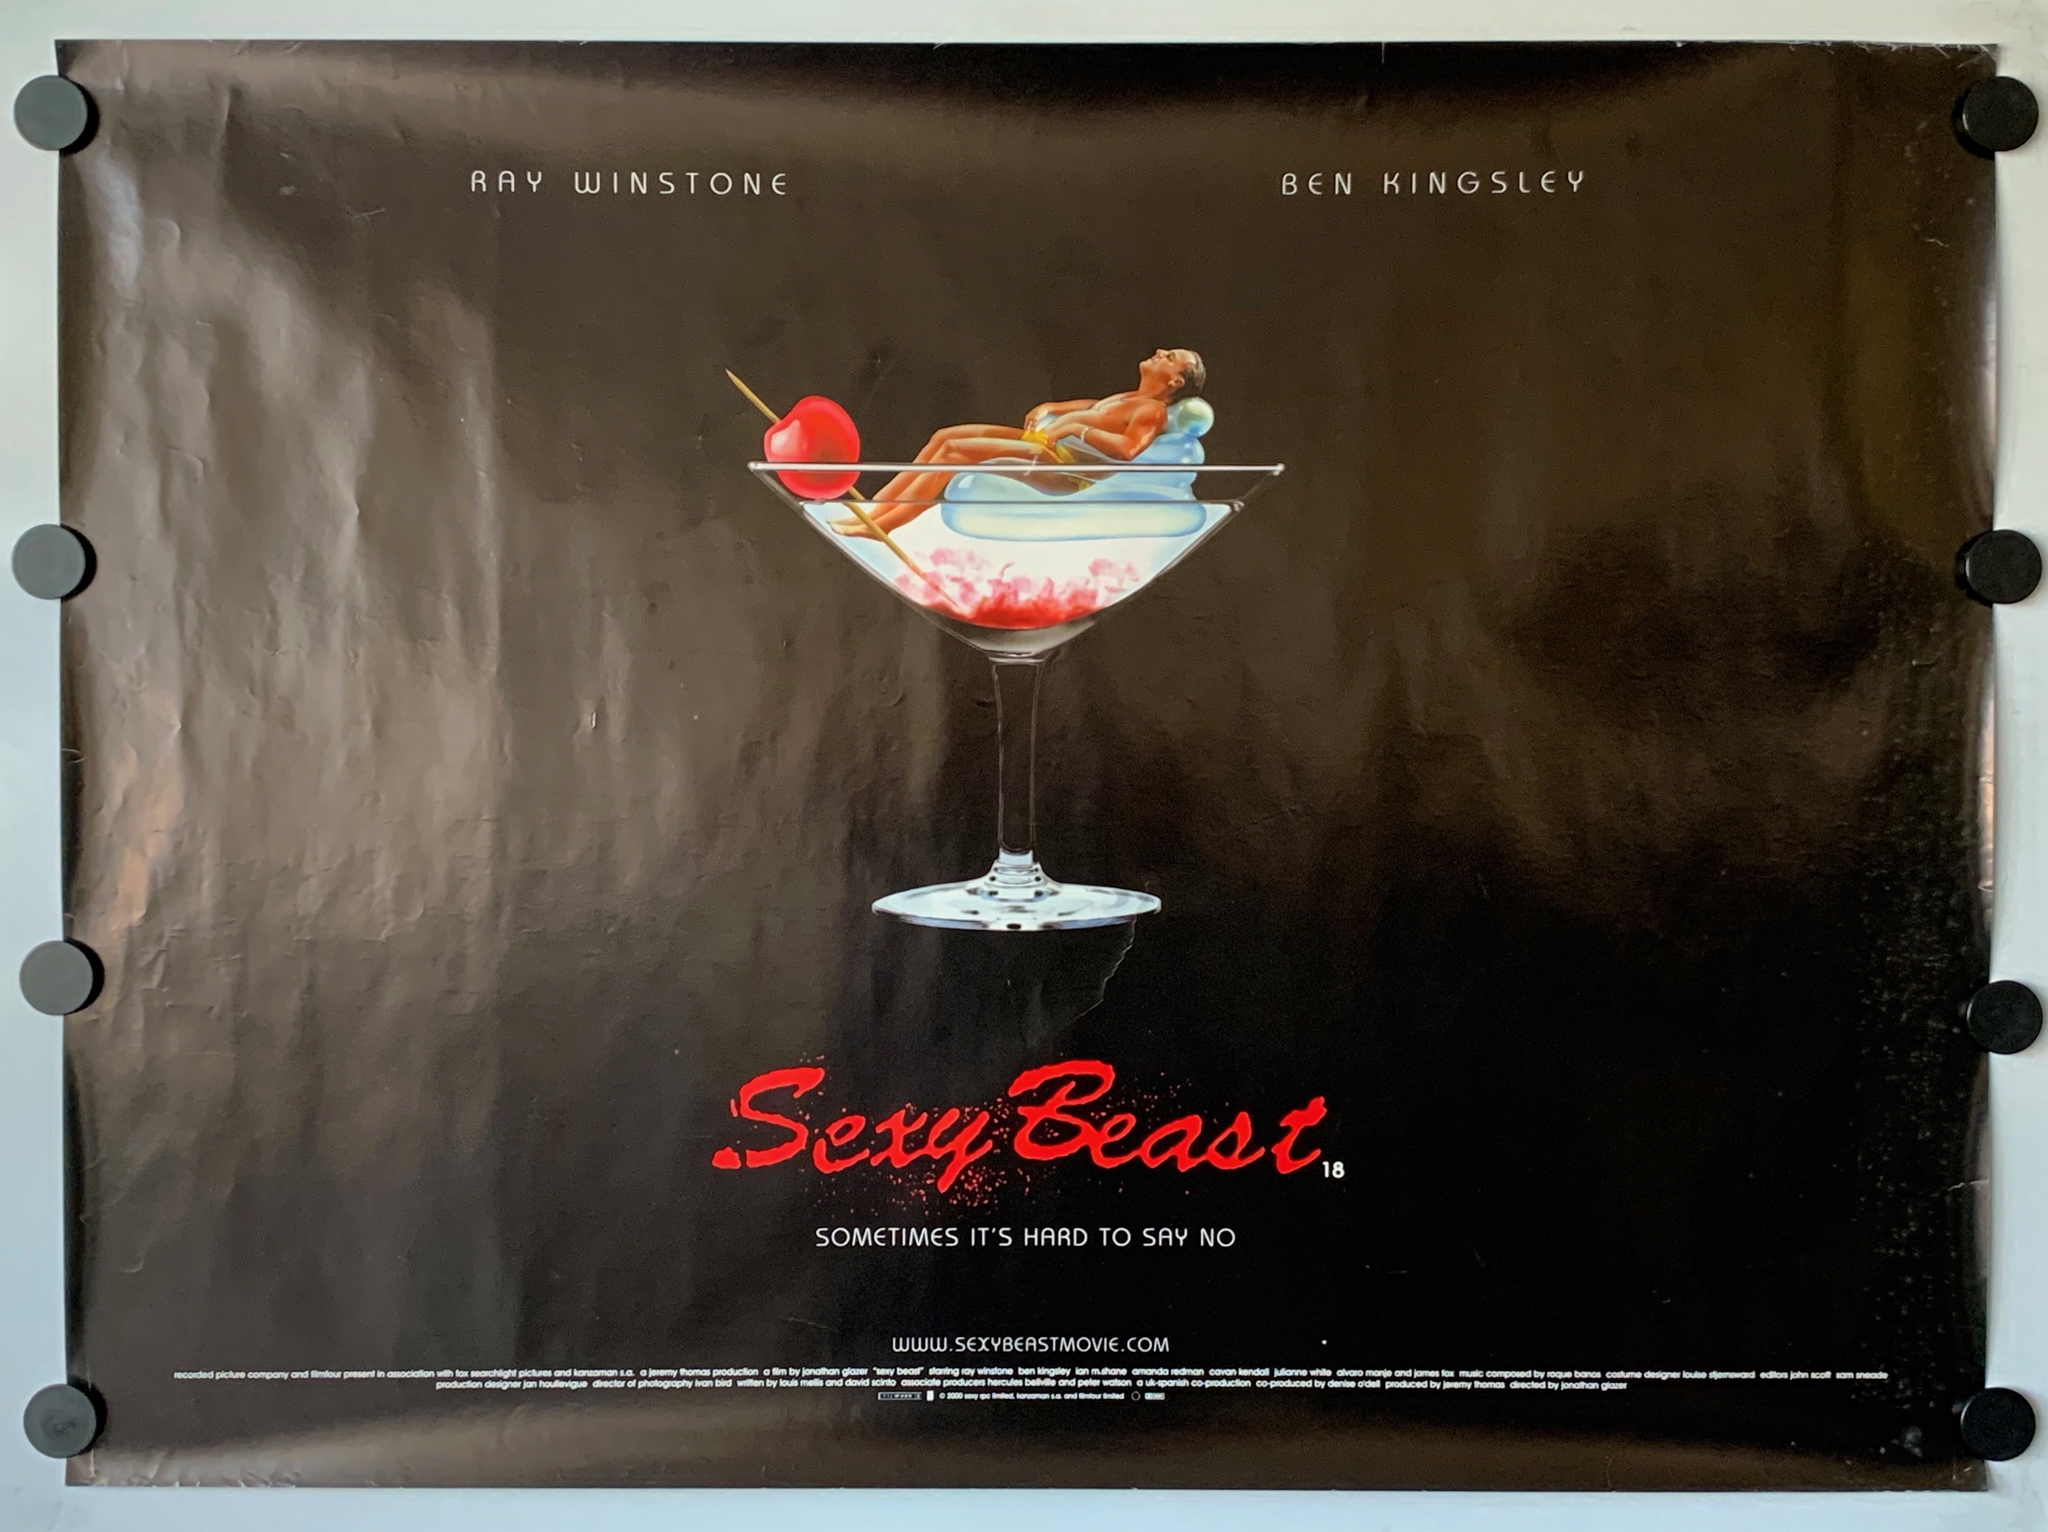 SEXY BEAST (2000) - British UK Quad - RAY WINSTONE - Cult British crime thriller - 30" x 40" (76 x